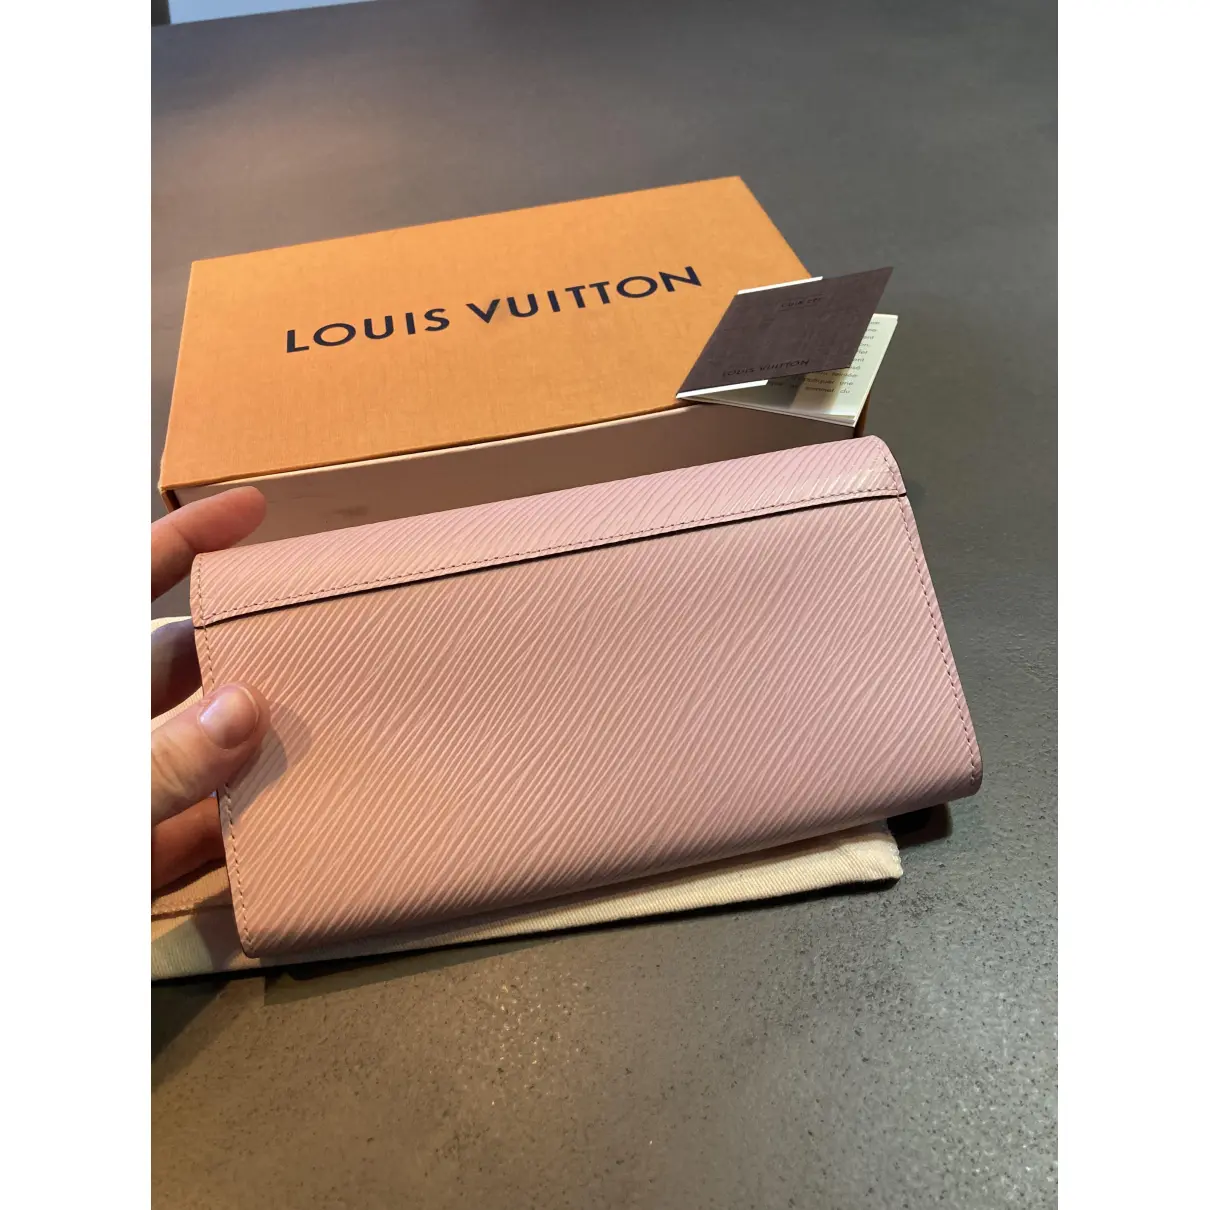 Buy Louis Vuitton Twist leather wallet online